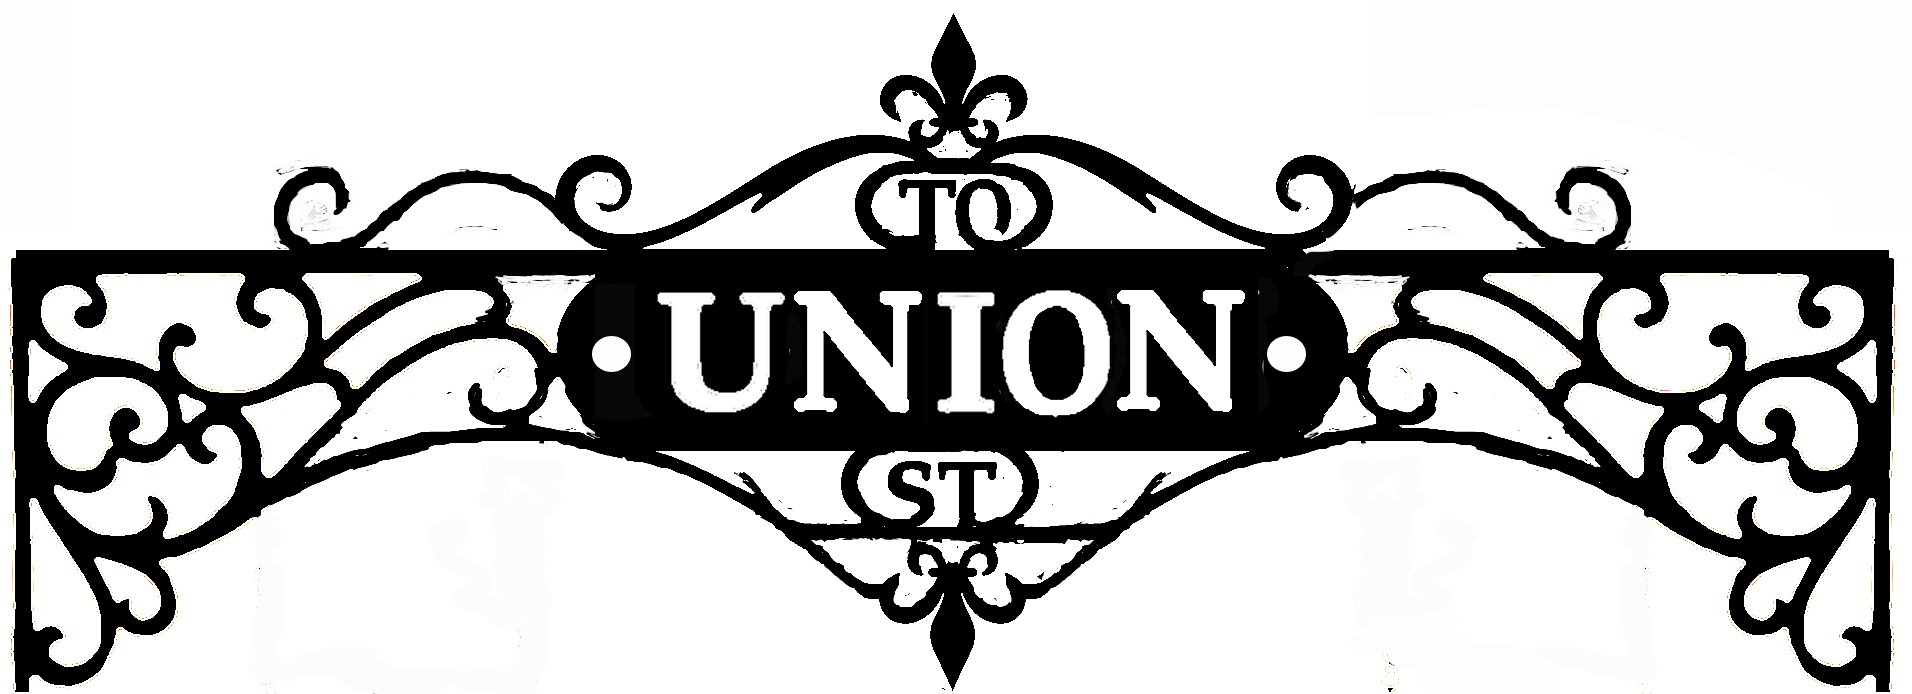 to union st sign motif v2.jpg